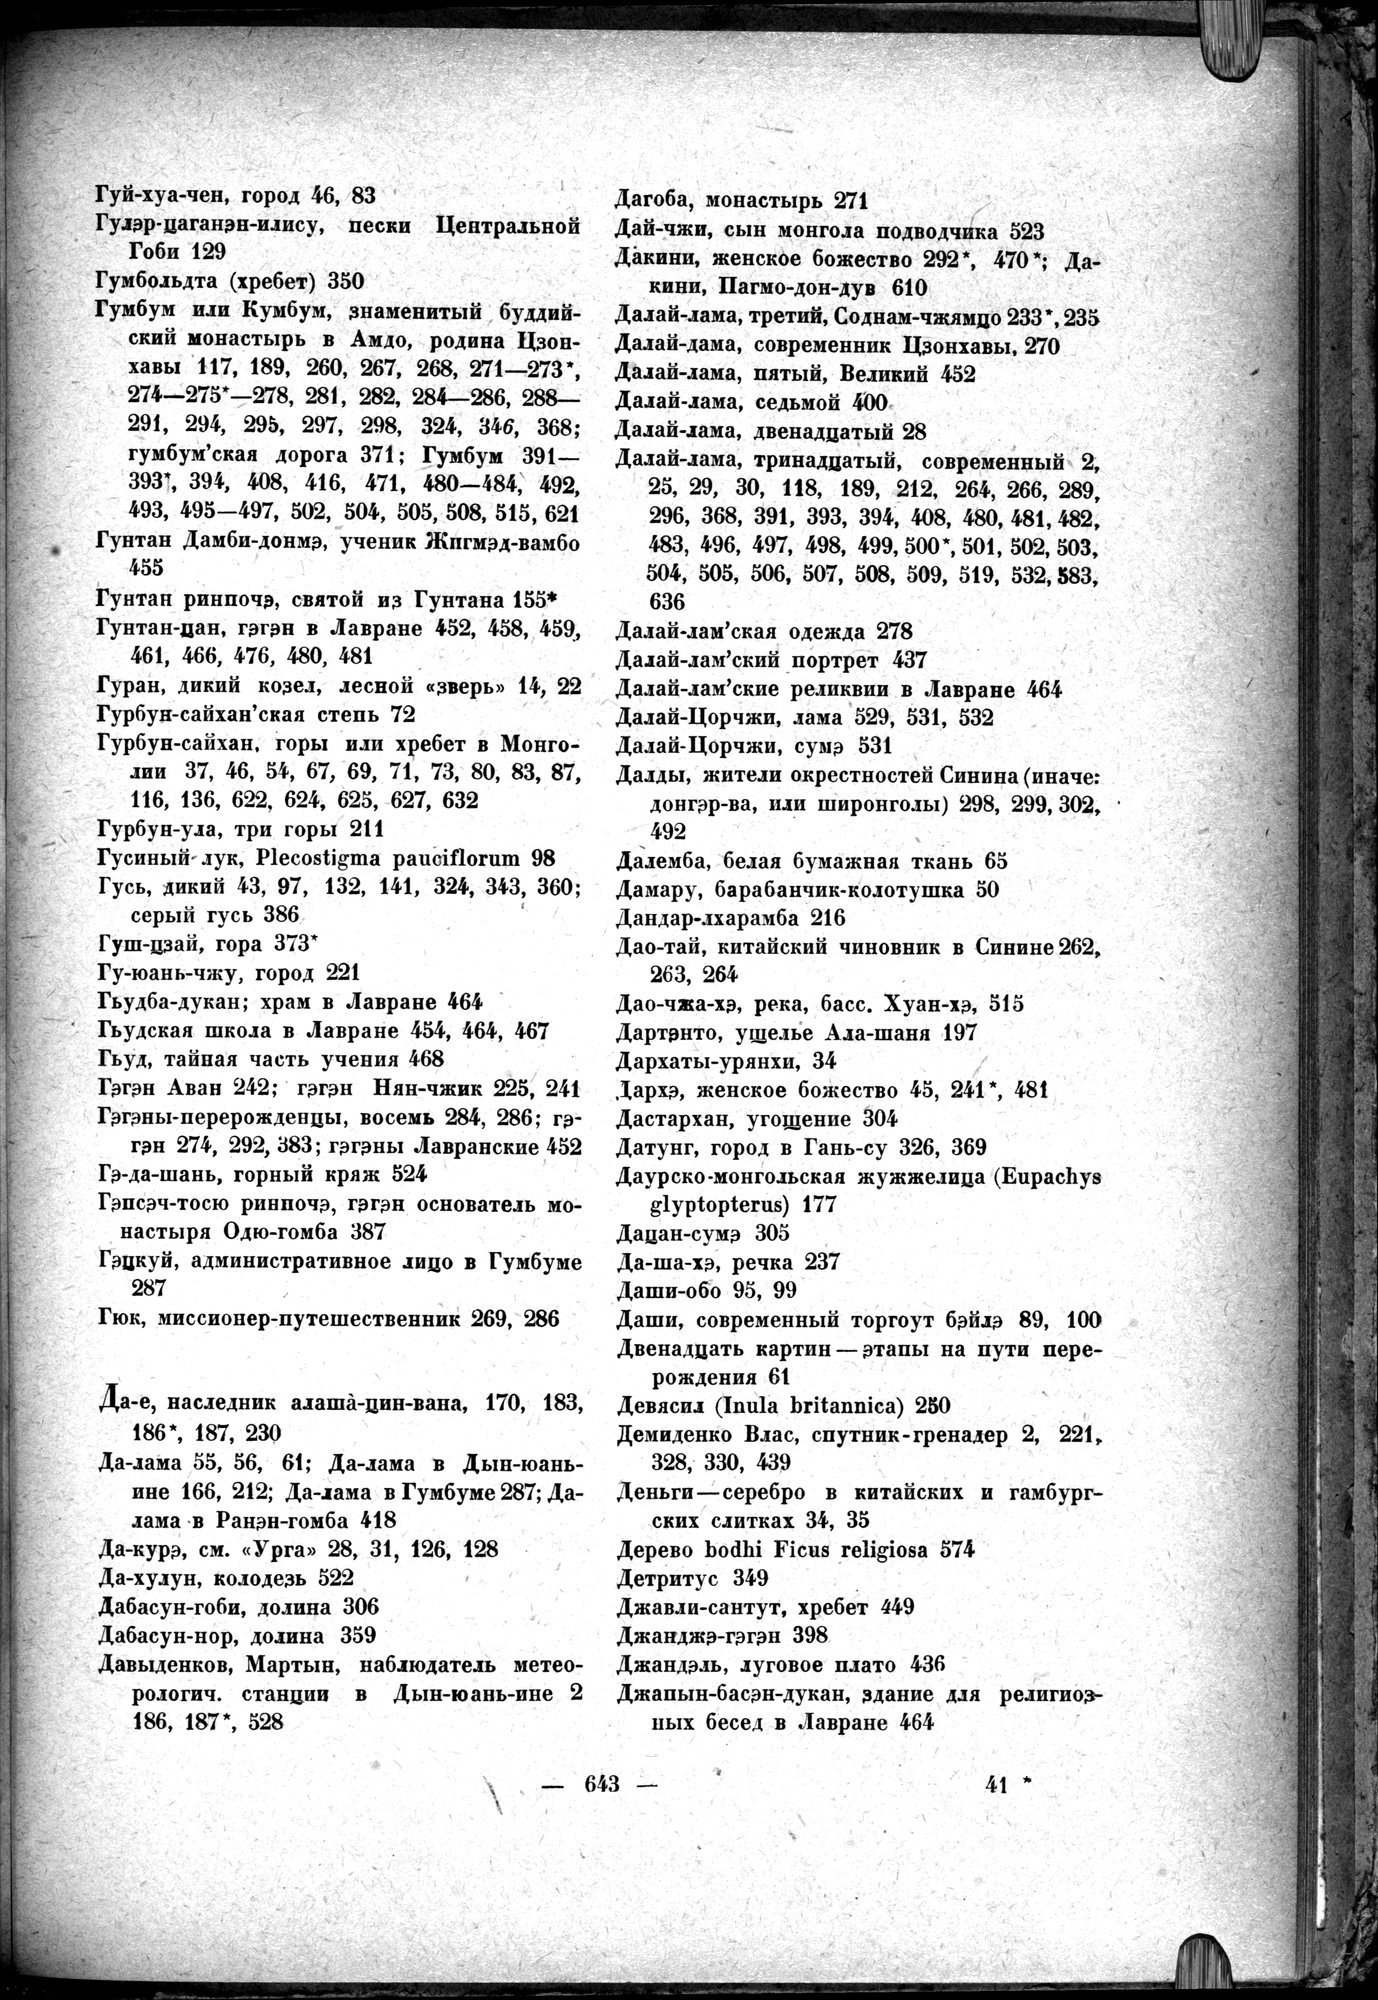 Mongoliya i Amdo i mertby gorod Khara-Khoto : vol.1 / Page 733 (Grayscale High Resolution Image)